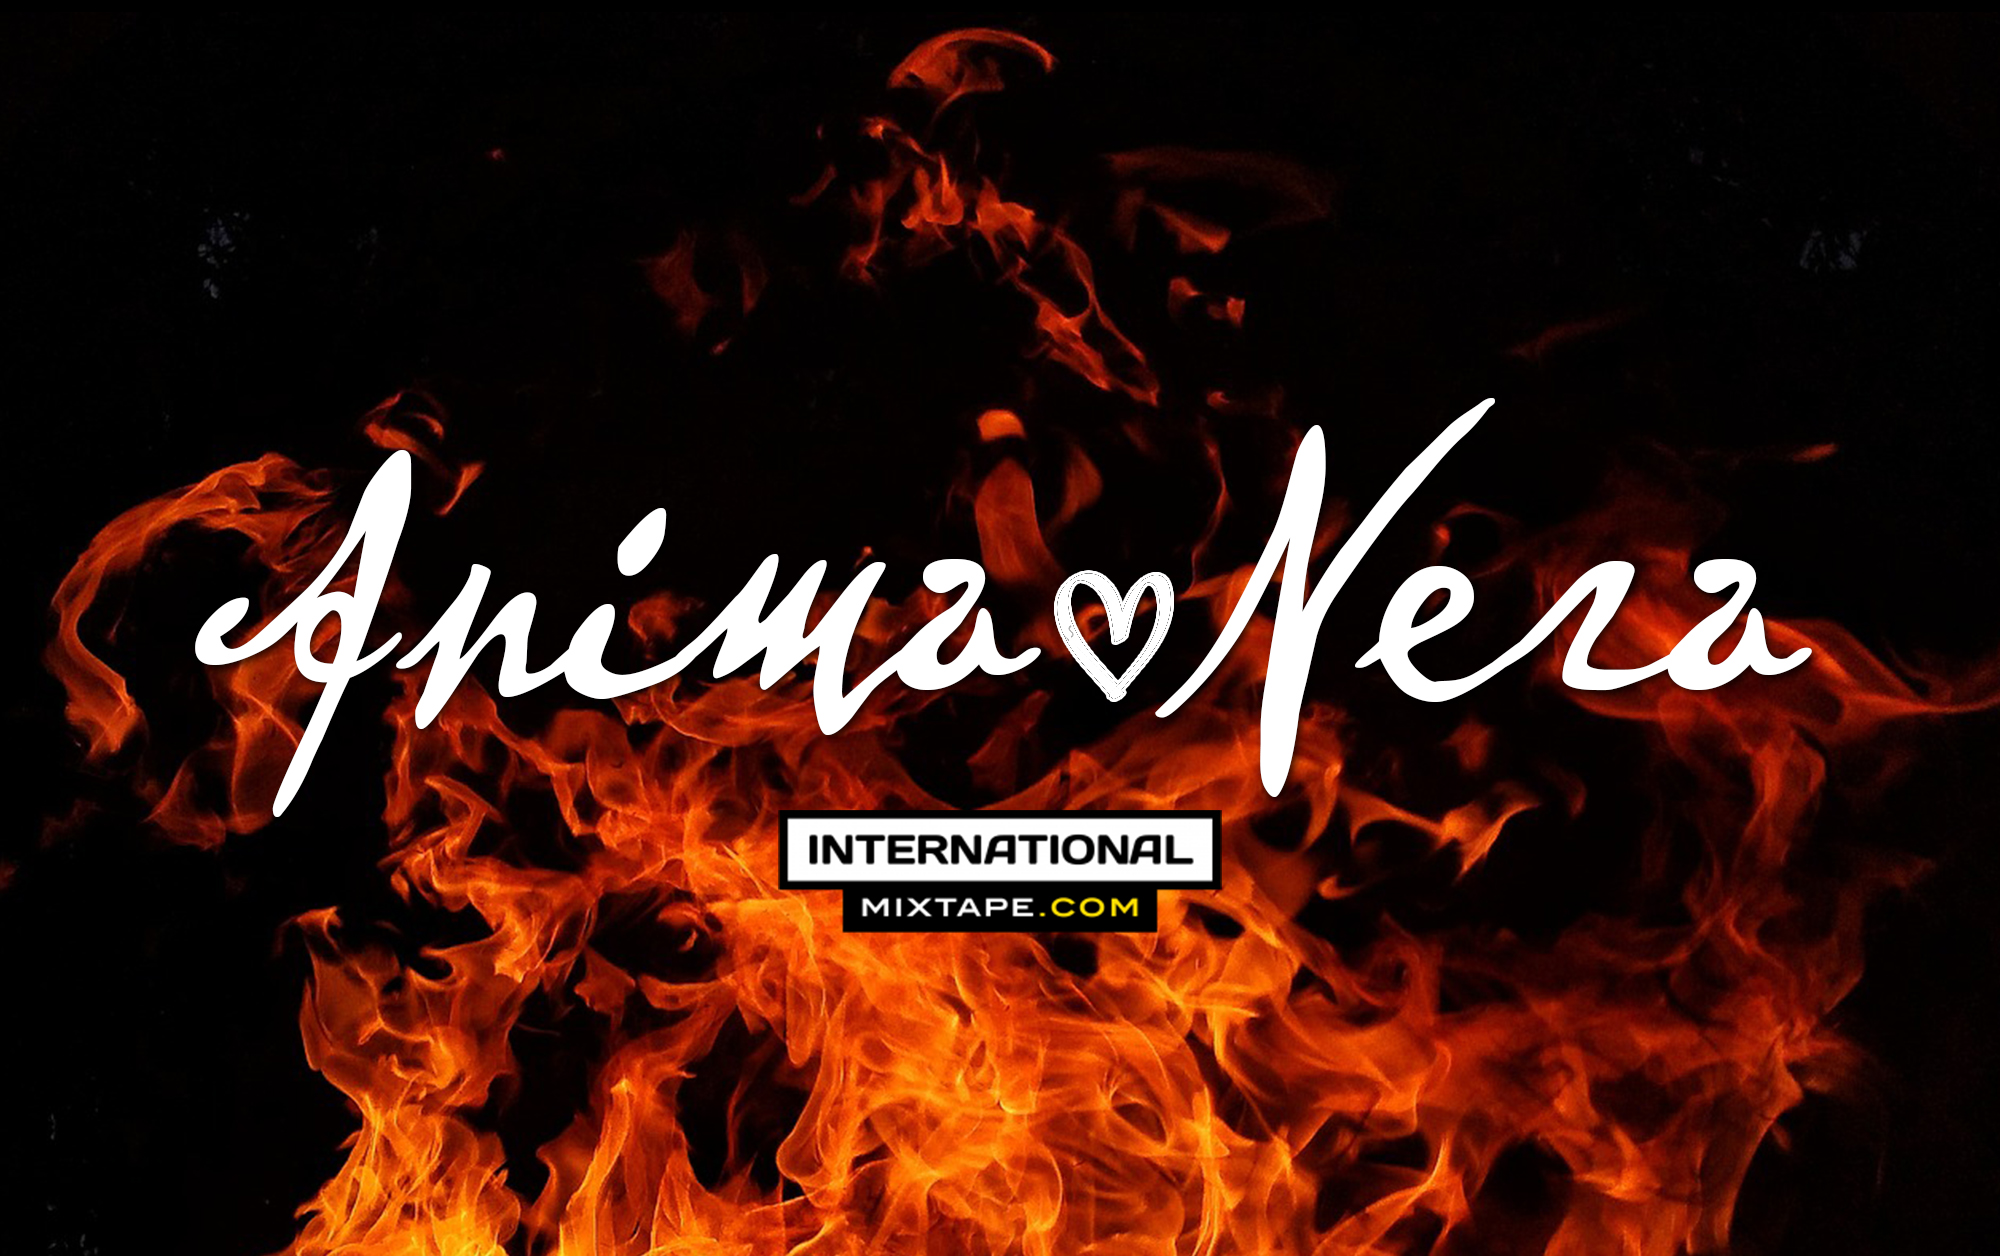 animanera rock music international mixtape